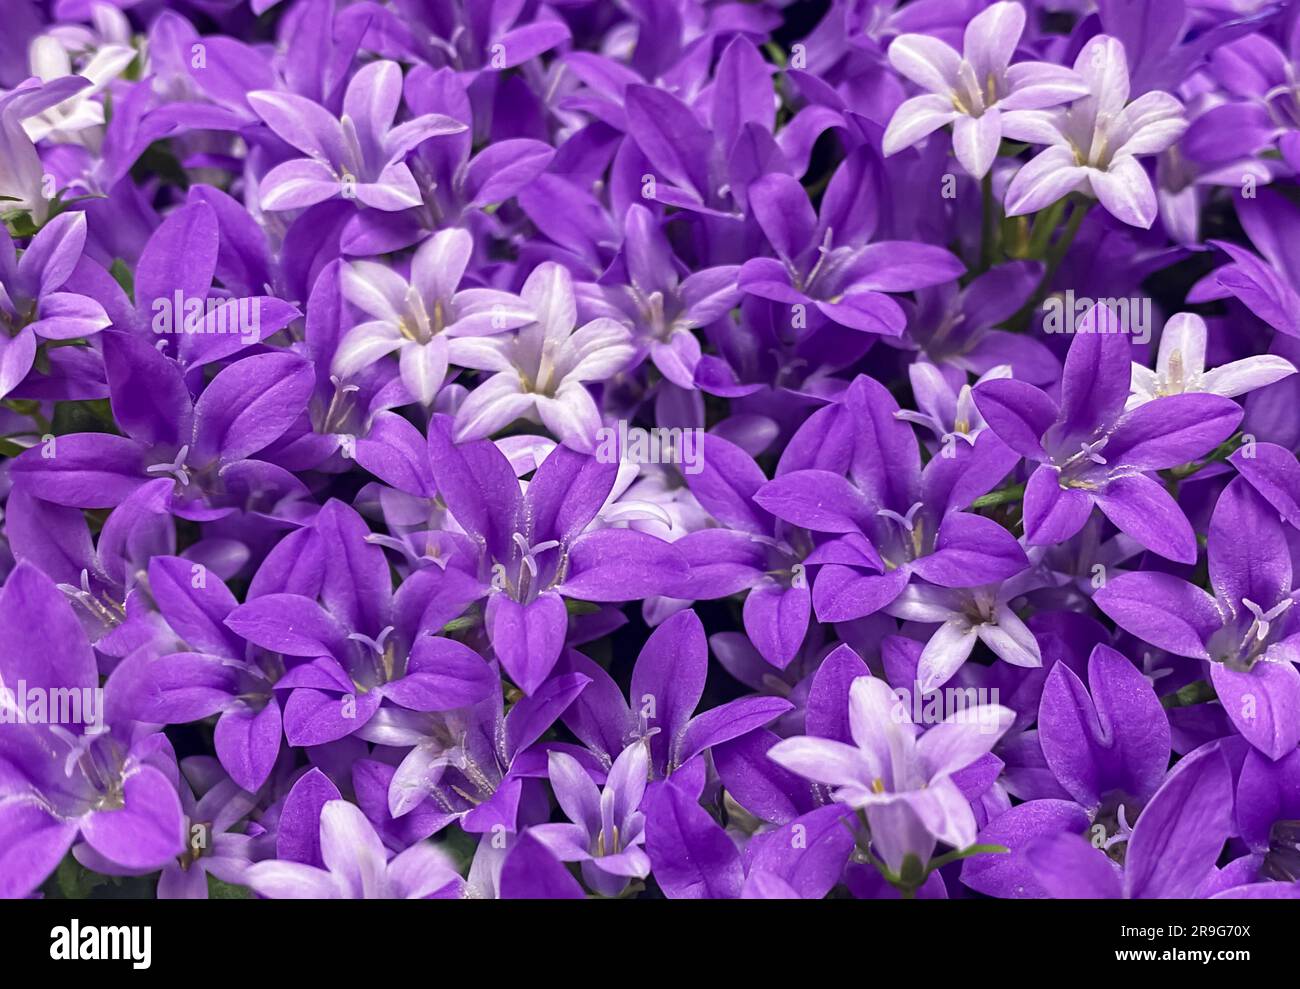 Purple flower Dalmatian Bellflower, Campanula portenschlagiana, close up background. Purple bell flowers in summer garden. Stock Photo